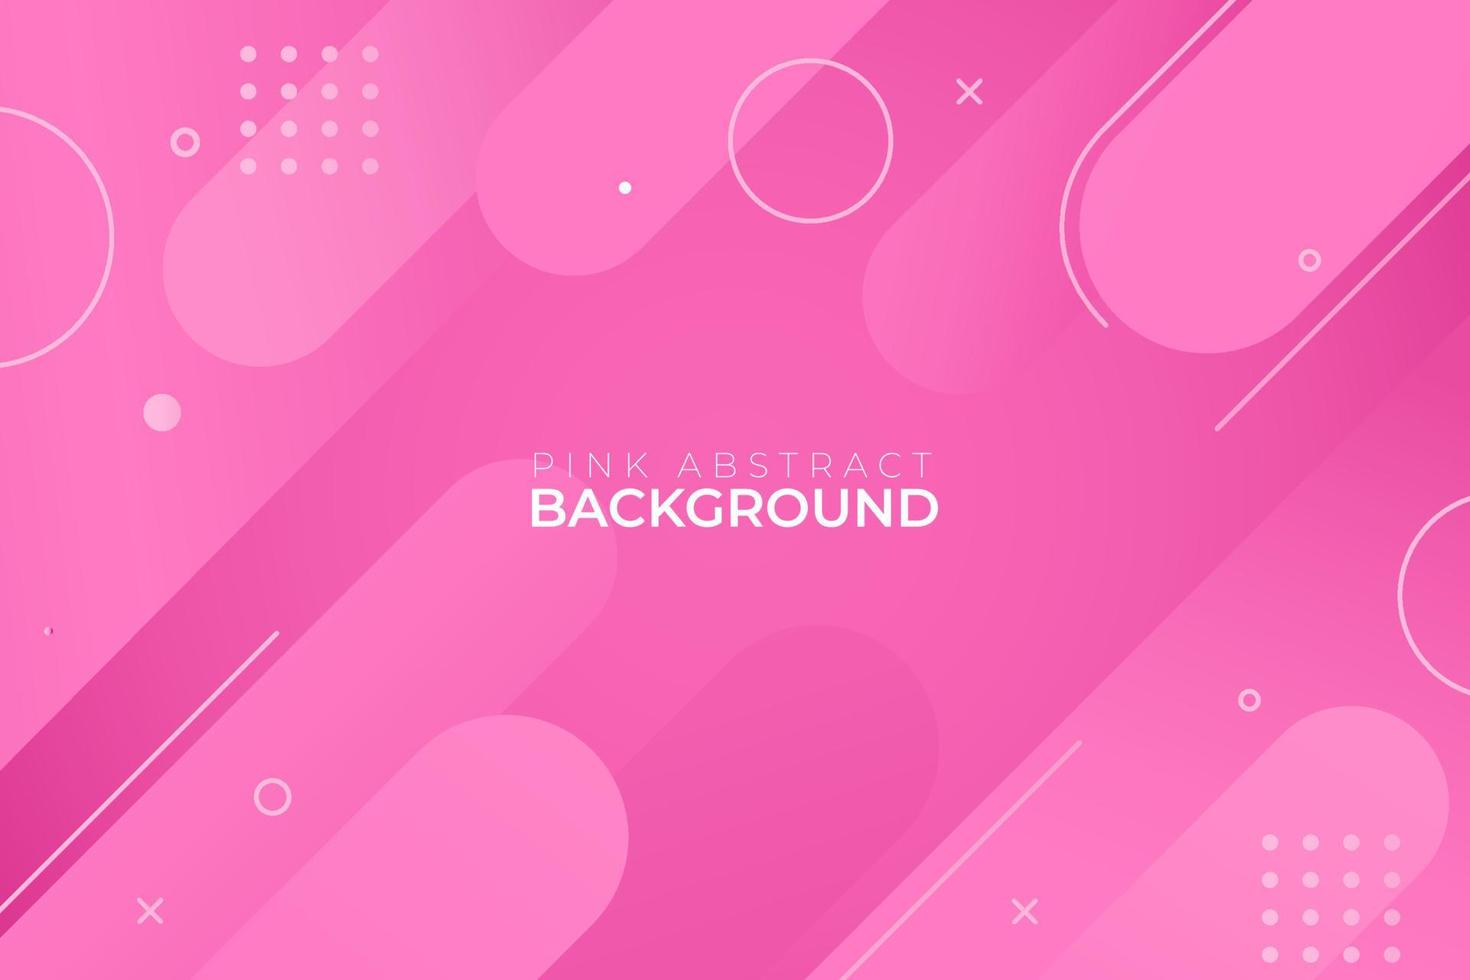 Modern Pink Background vector